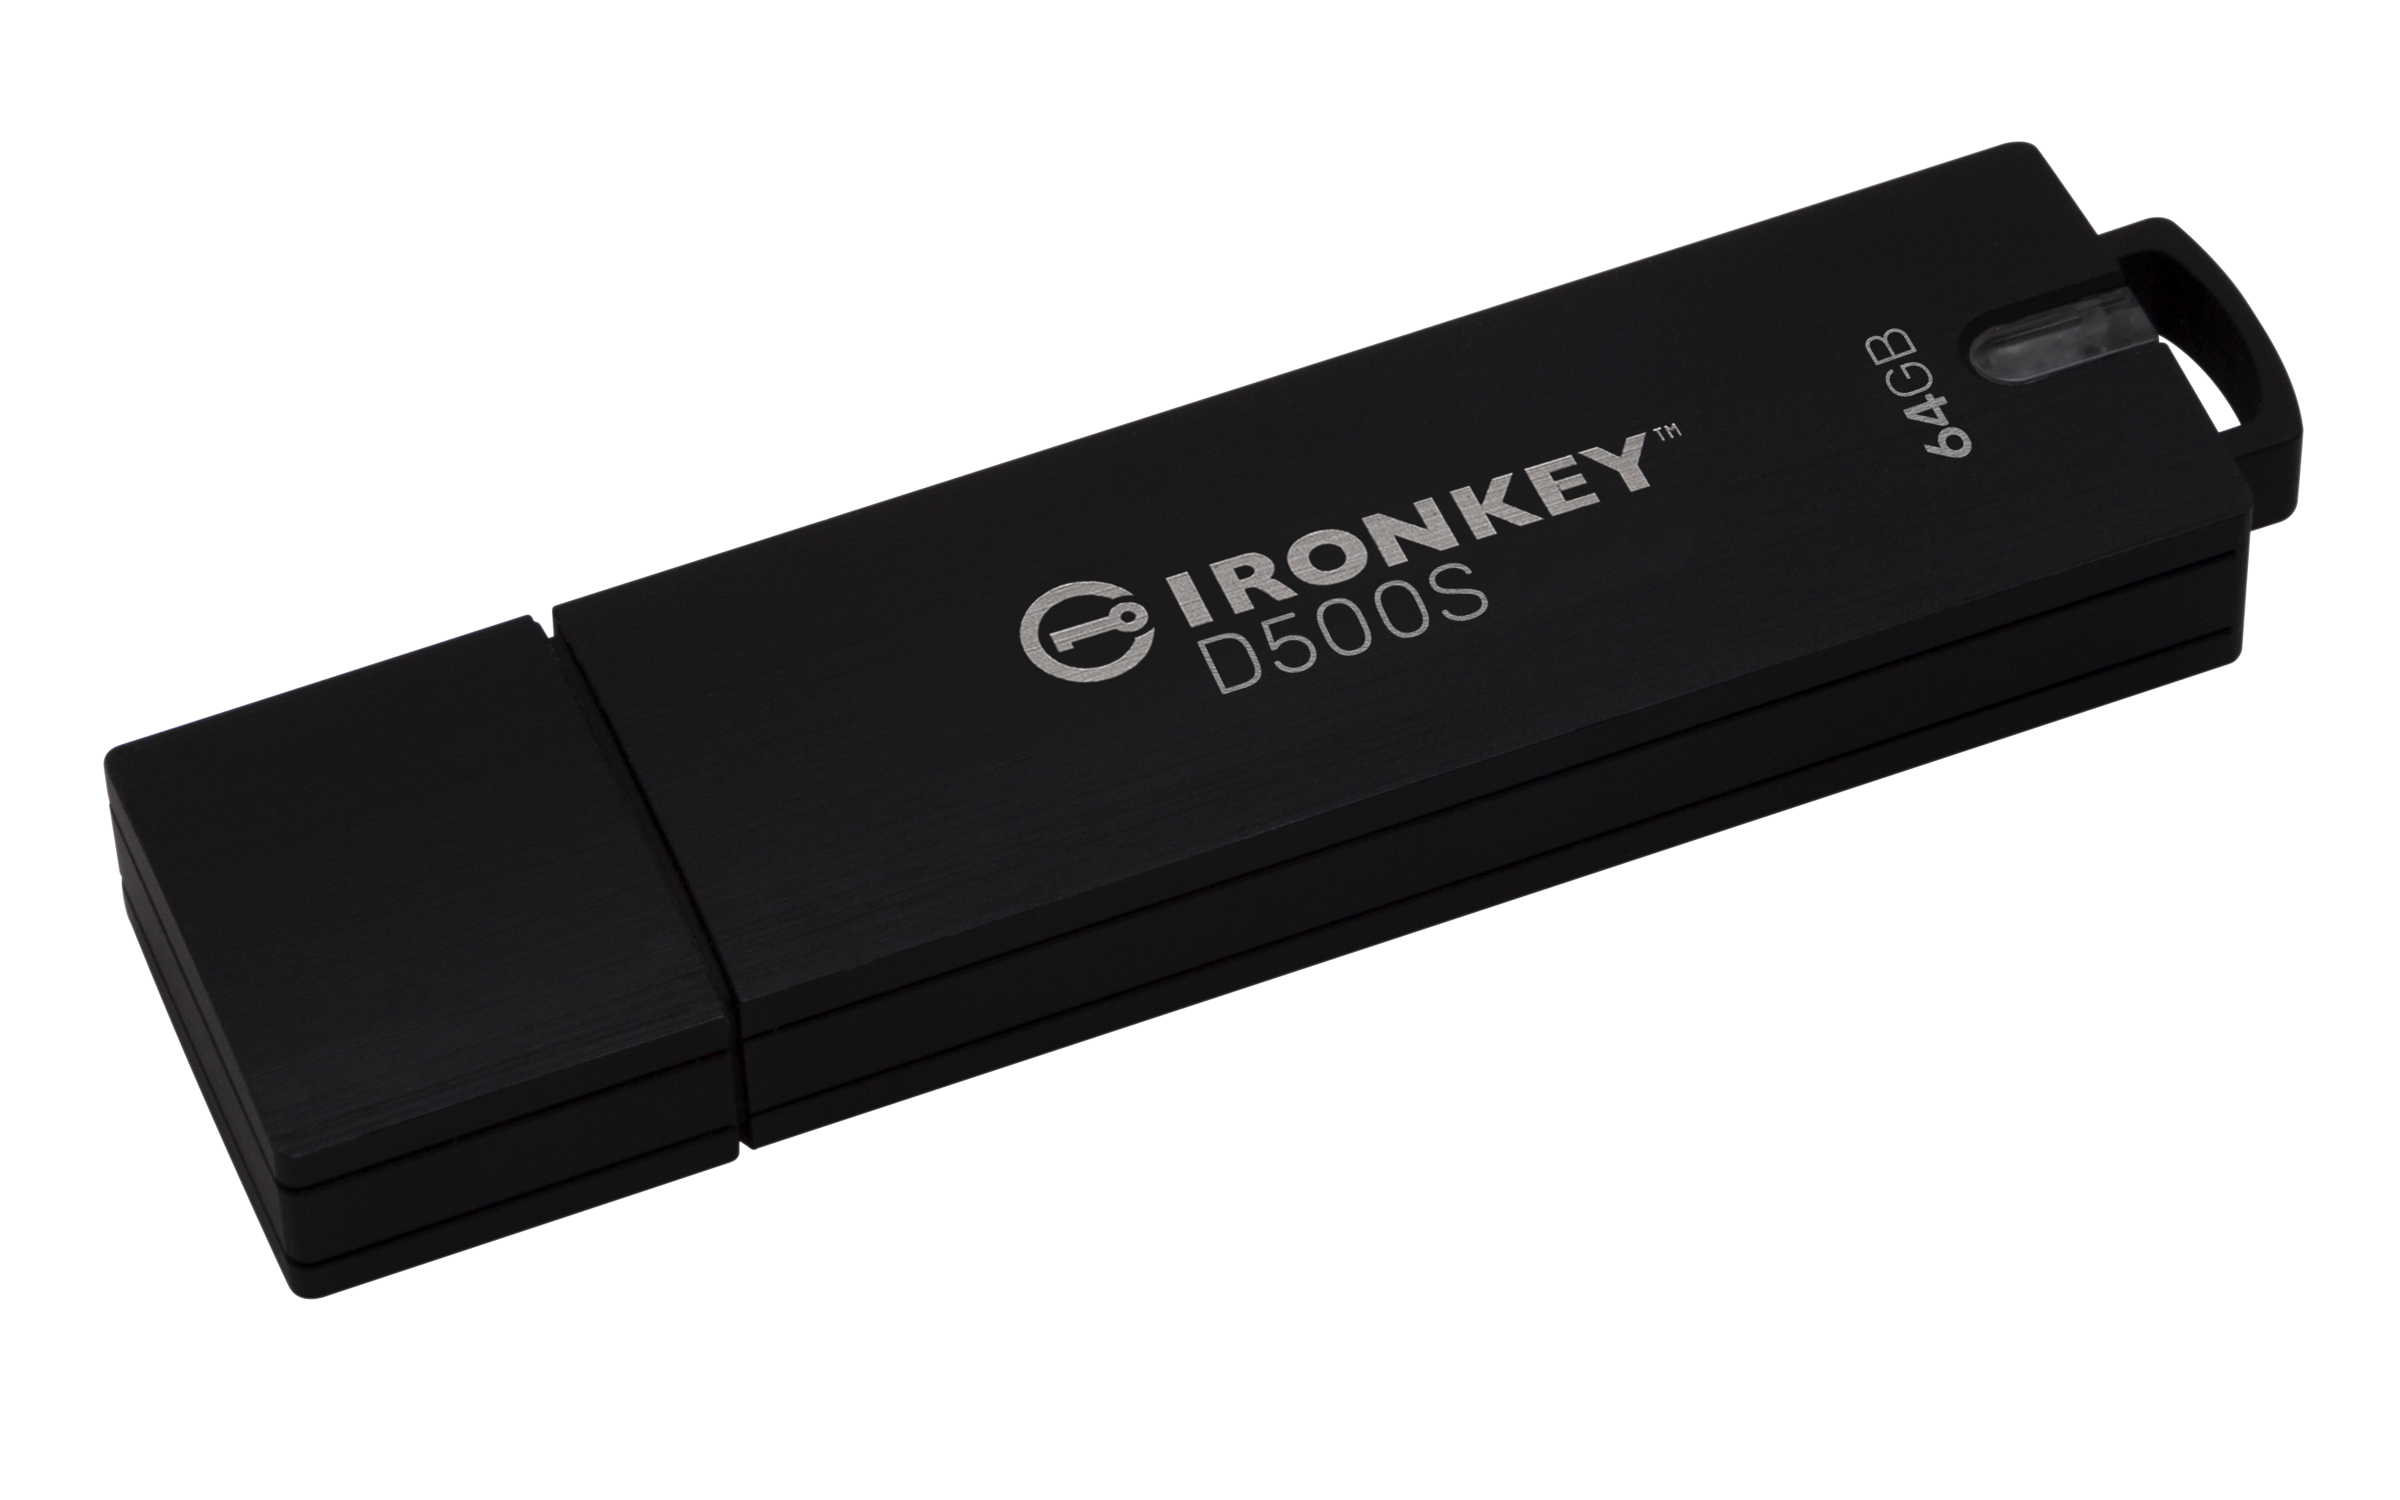 64GB USB Kingston Ironkey D500S FIPS 140-3 Lvl 3